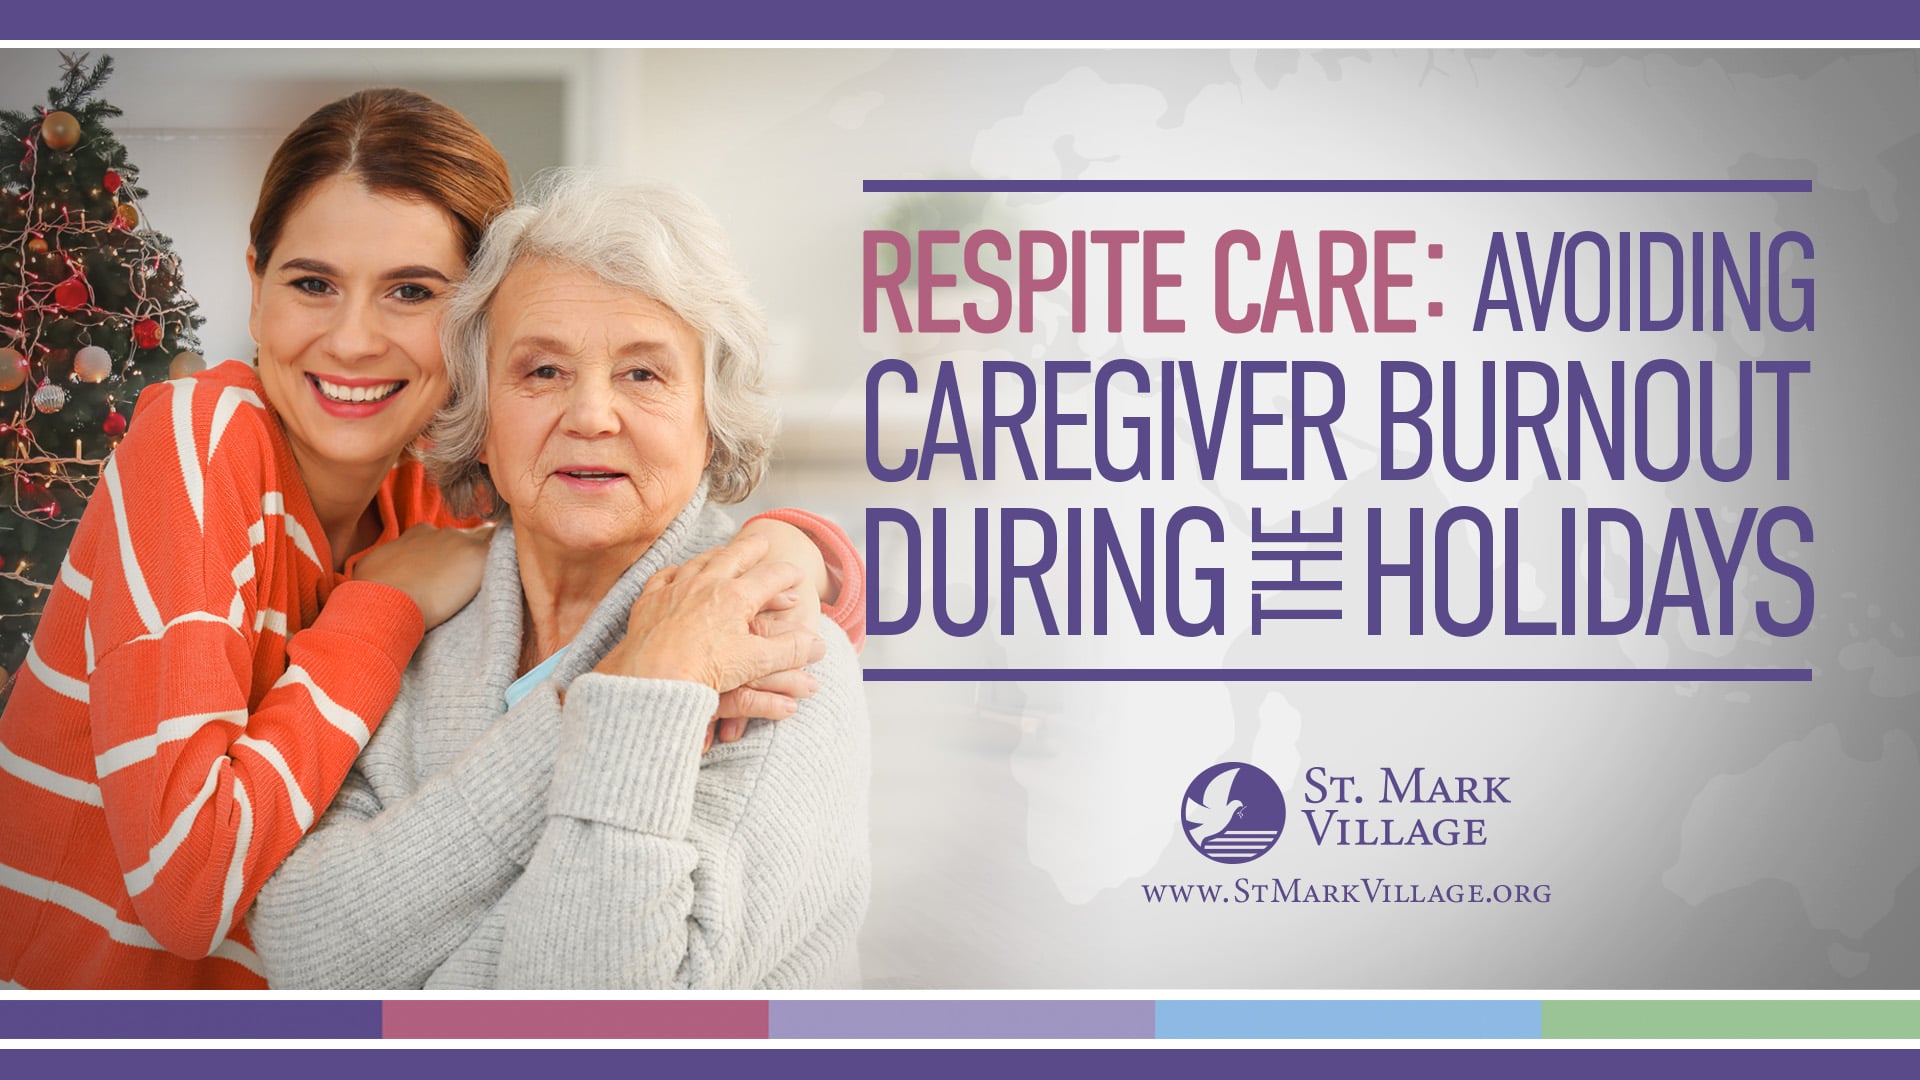 Respite care avoiding caregiver burnout during the holidays.